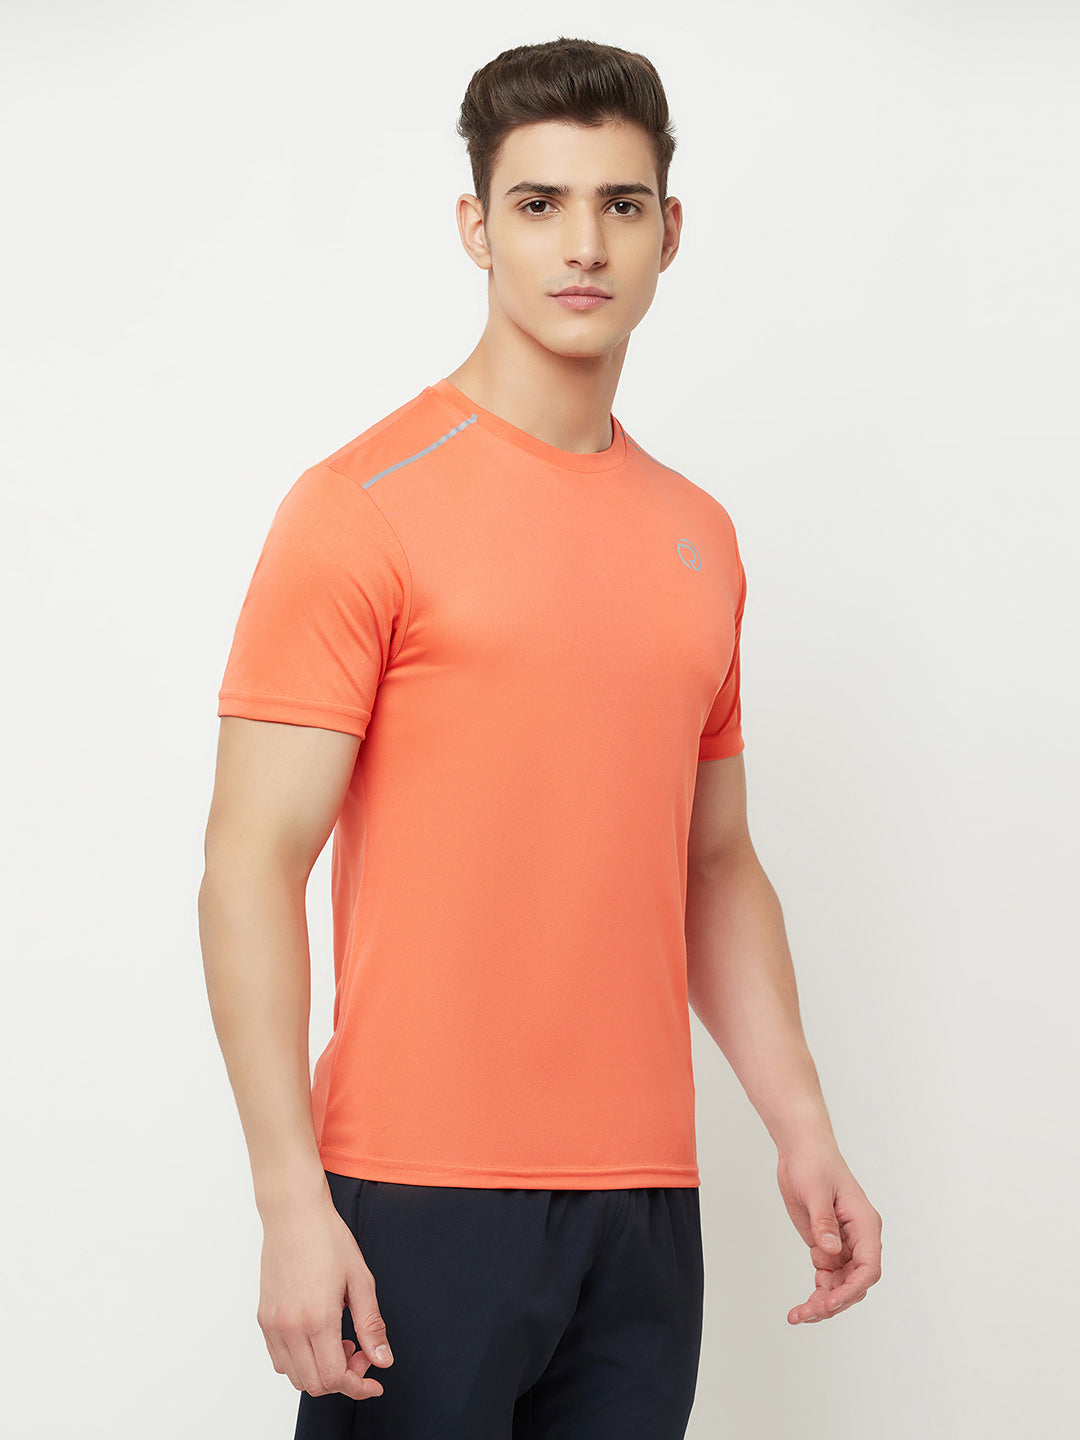 2 pc Combo - Shorts Navy & Light Dry Fit Tshirt - Orange